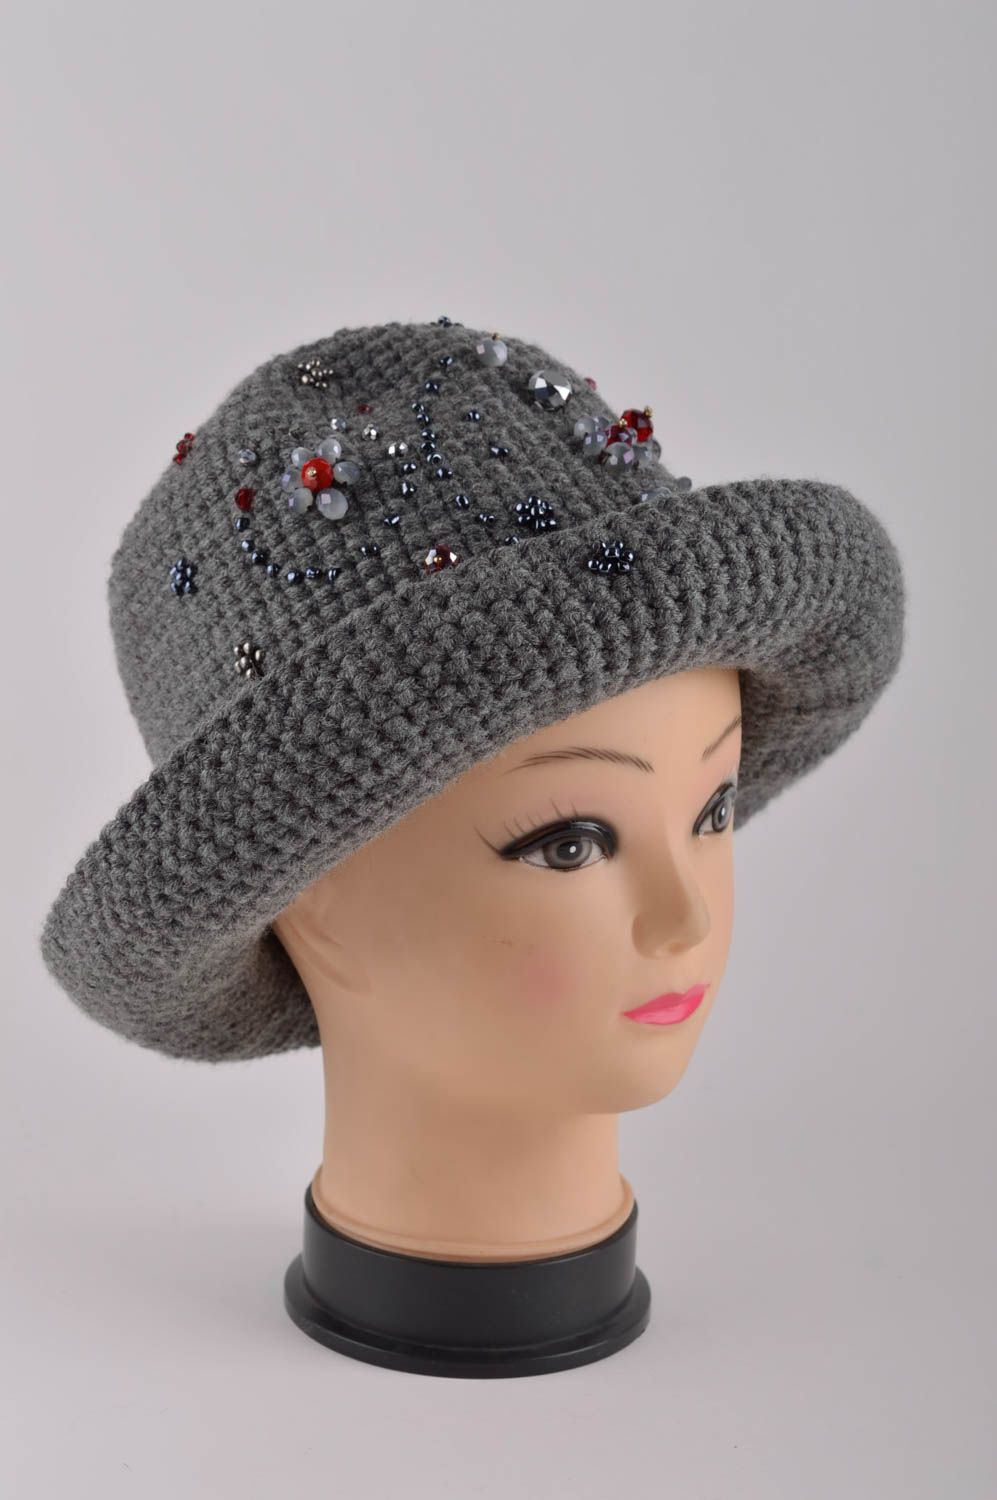 Handmade accessories for women winter hat ladies hat crochet hat gifts for women photo 2